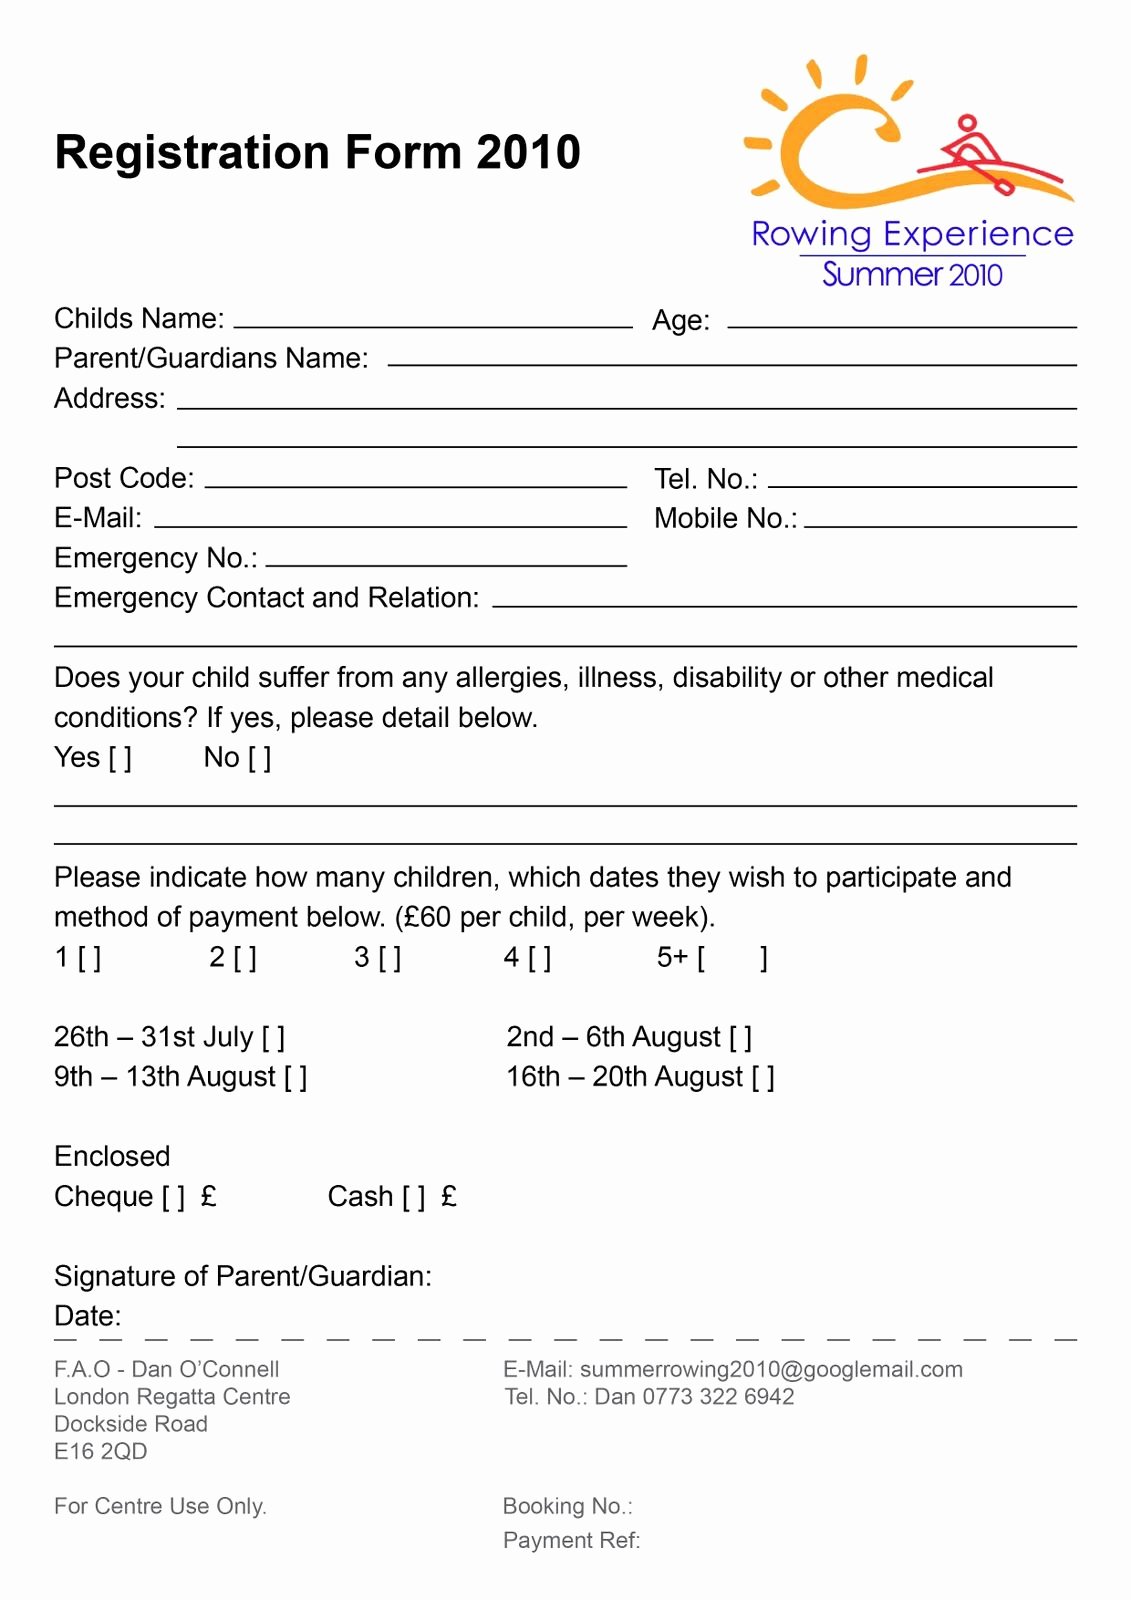 Camp Registration form Template Fresh Pin On Registration form